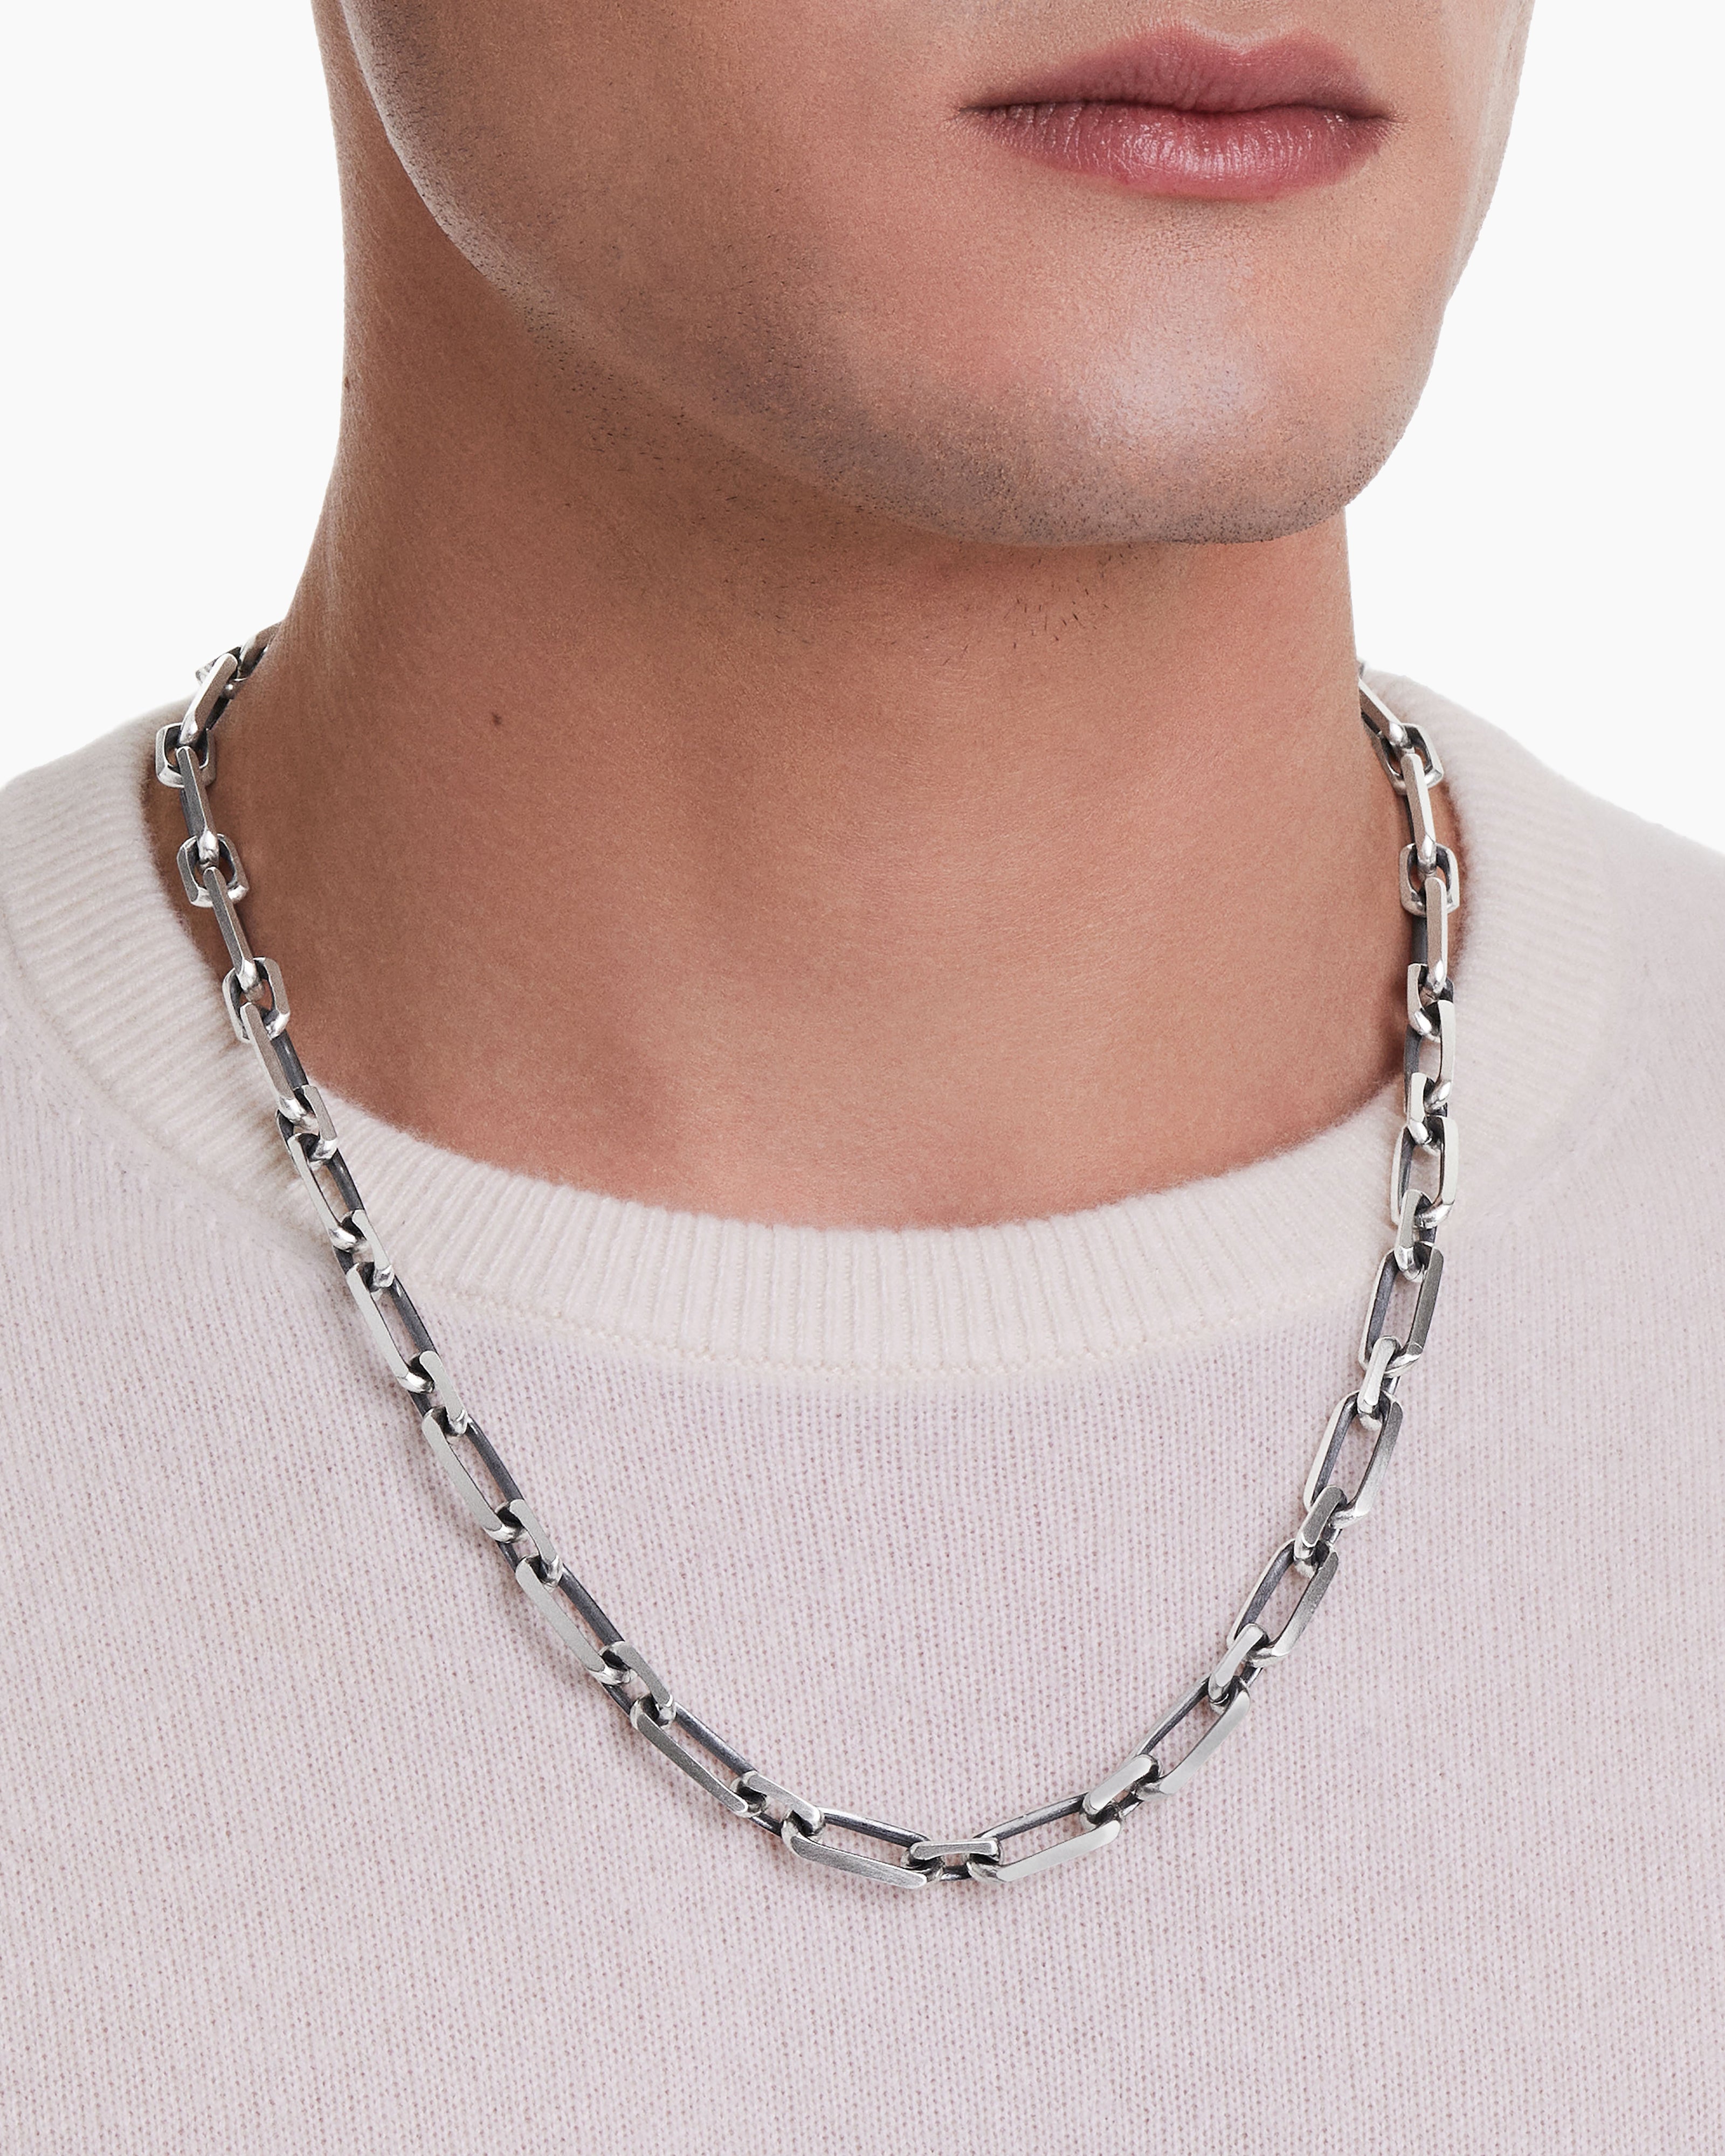 8mm Gold Men's Clip Cable Link Necklace Chain for Men